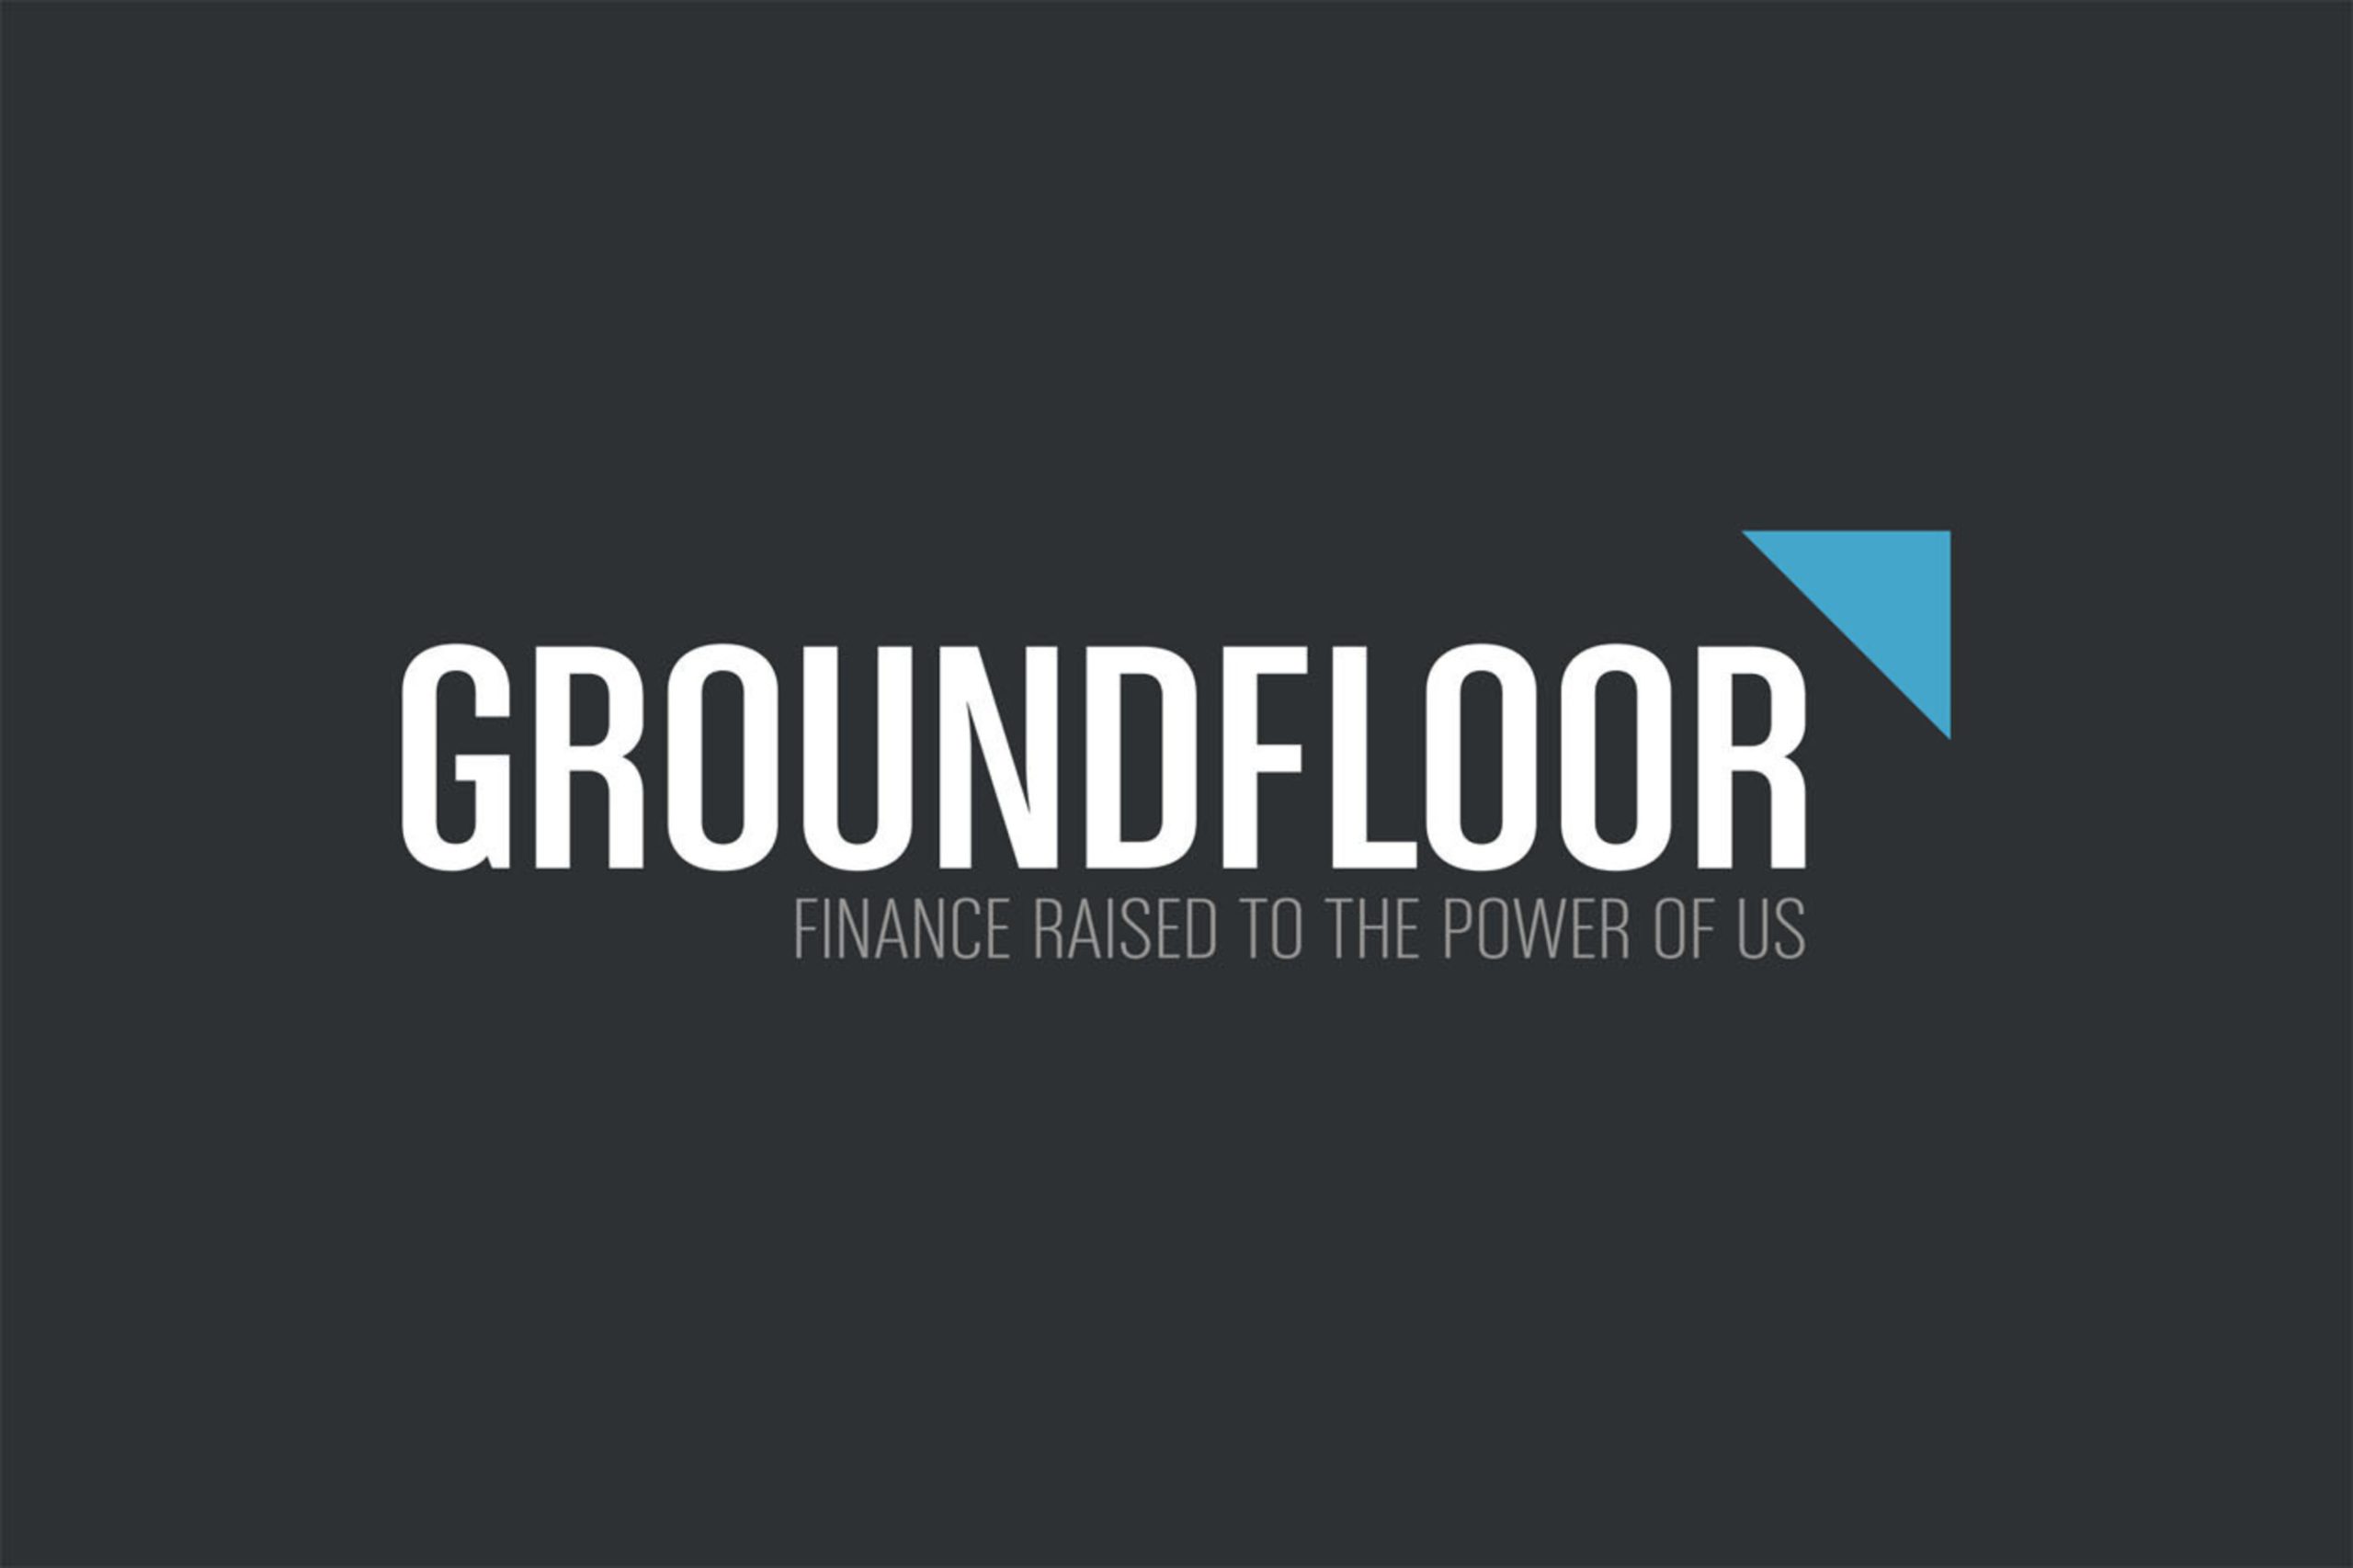 Ground floor real estate investment